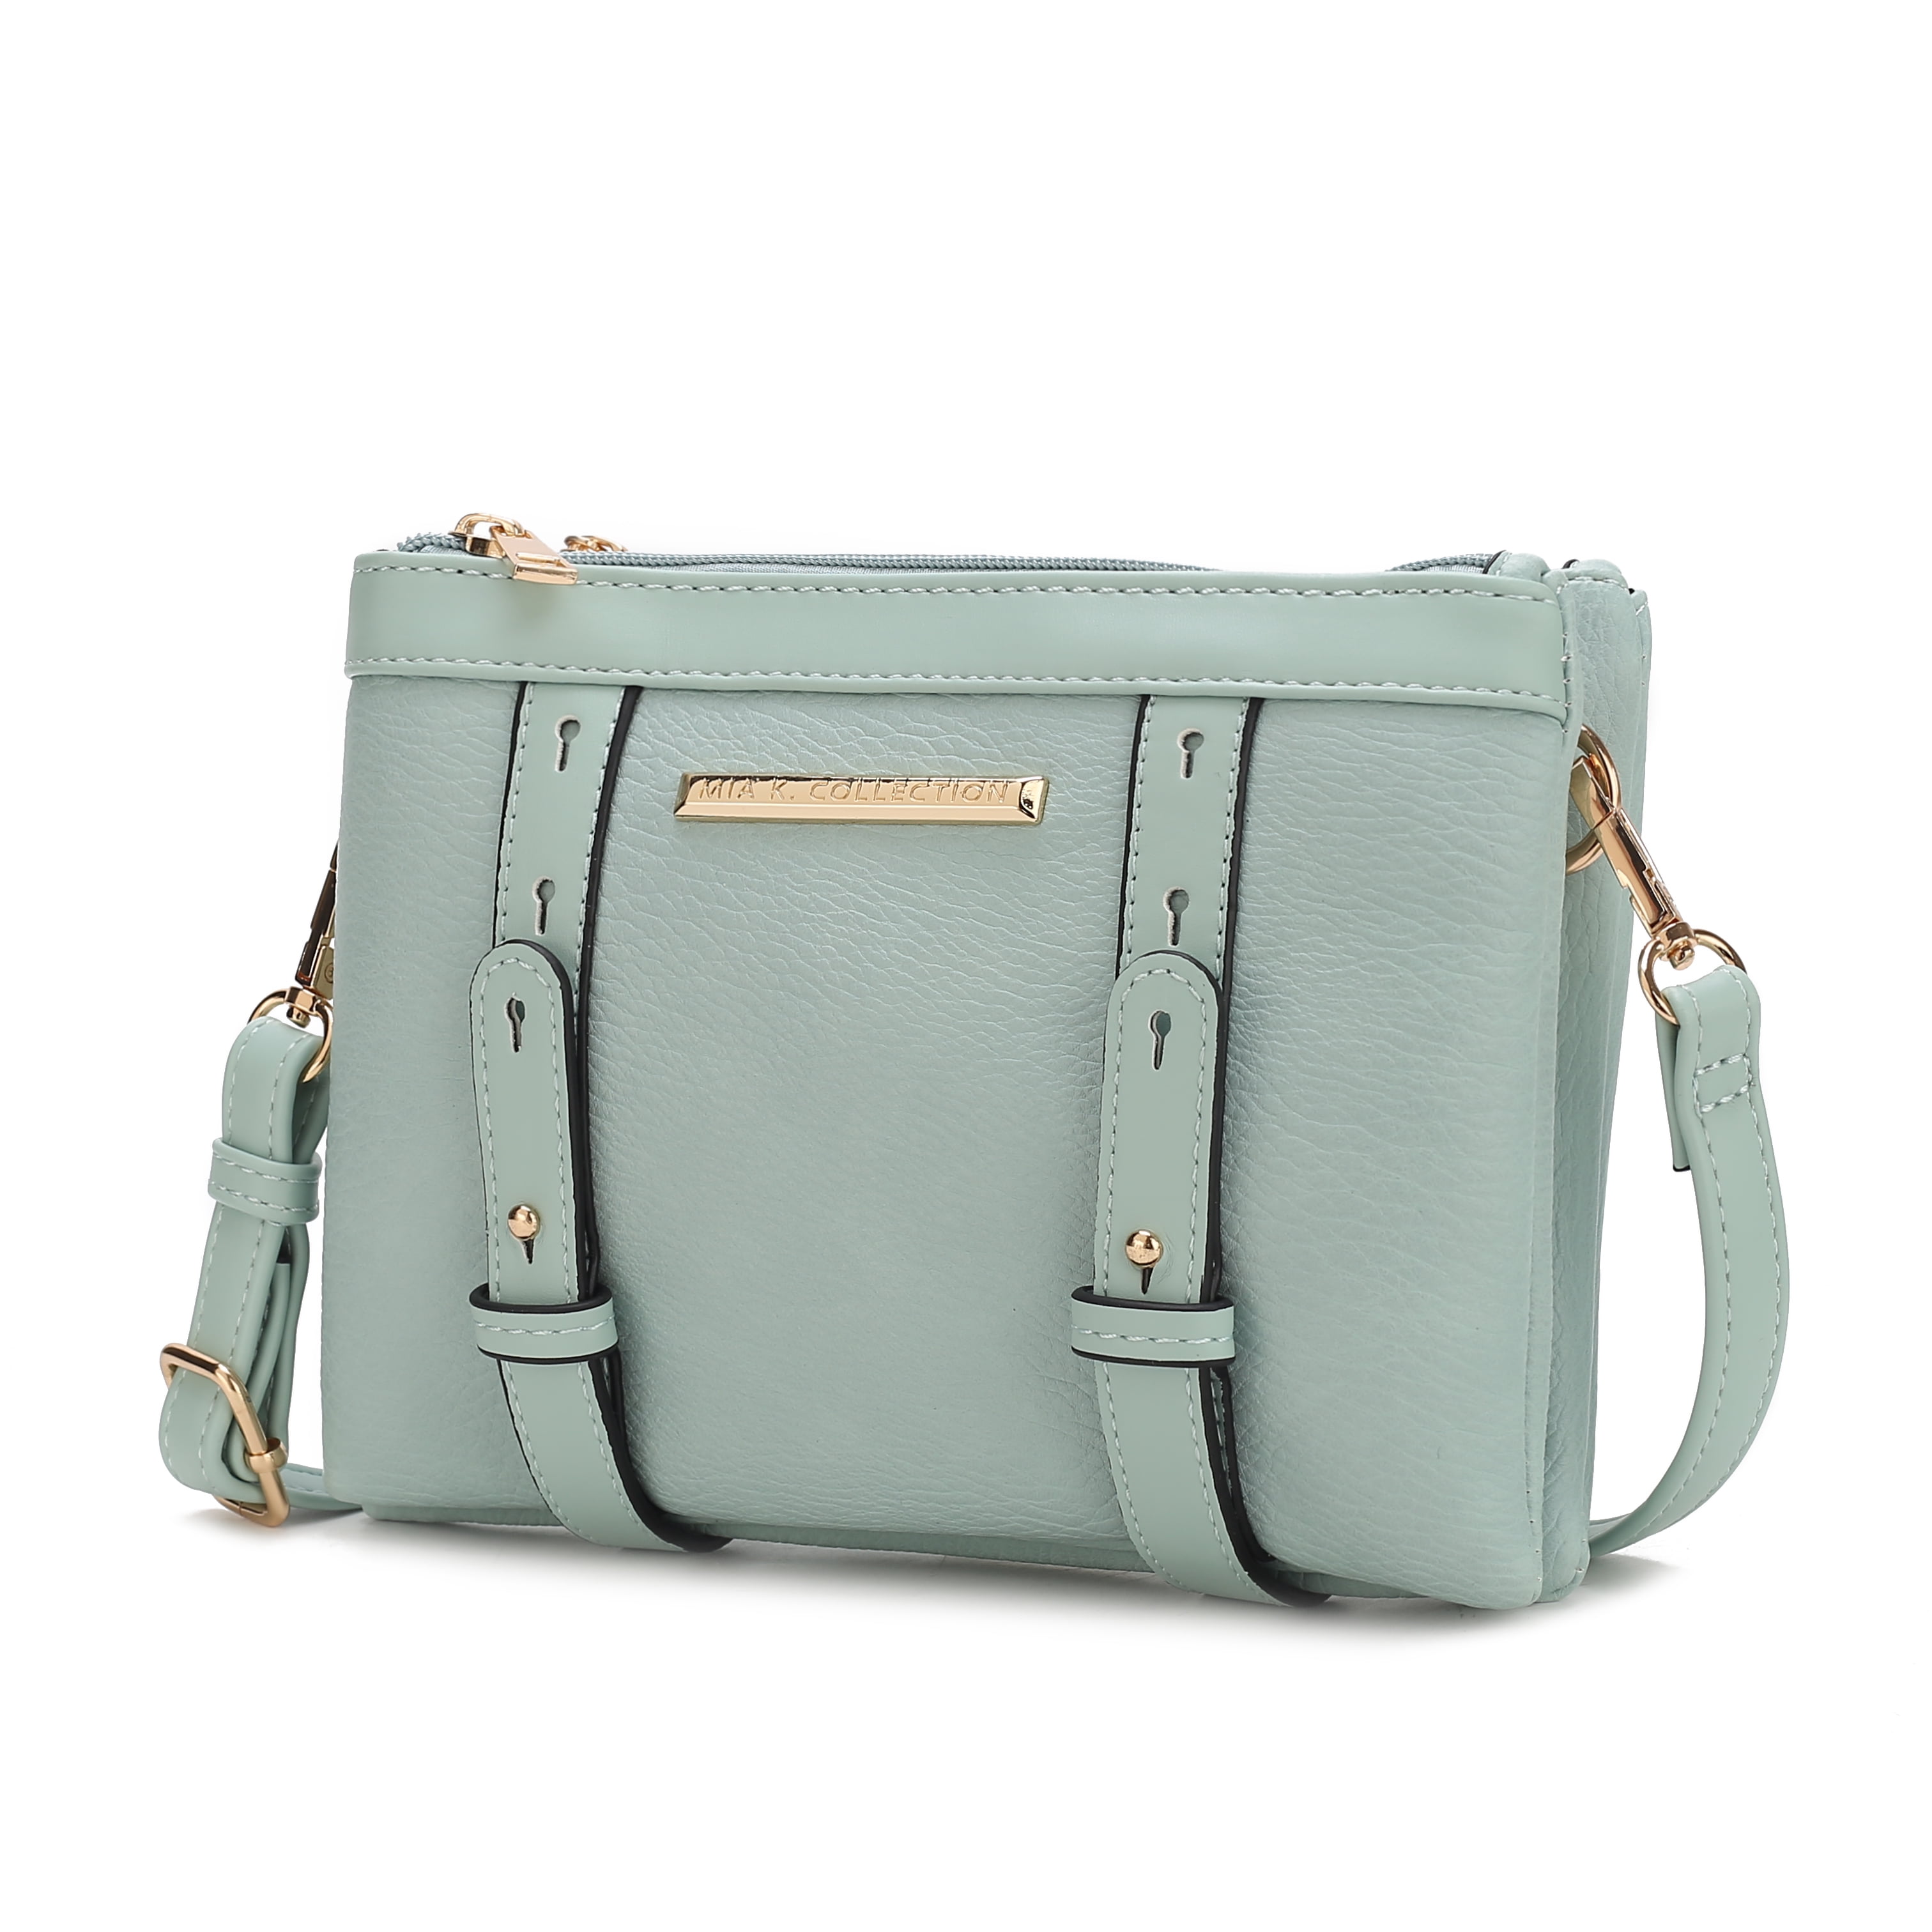 Buy MKF Collection Satchel Bag for Womenââ‚¬â„¢s Crossbody Handbag Vegan  Leather Top-Handle, Wristlet Wallet Purse Set Tan at Amazon.in